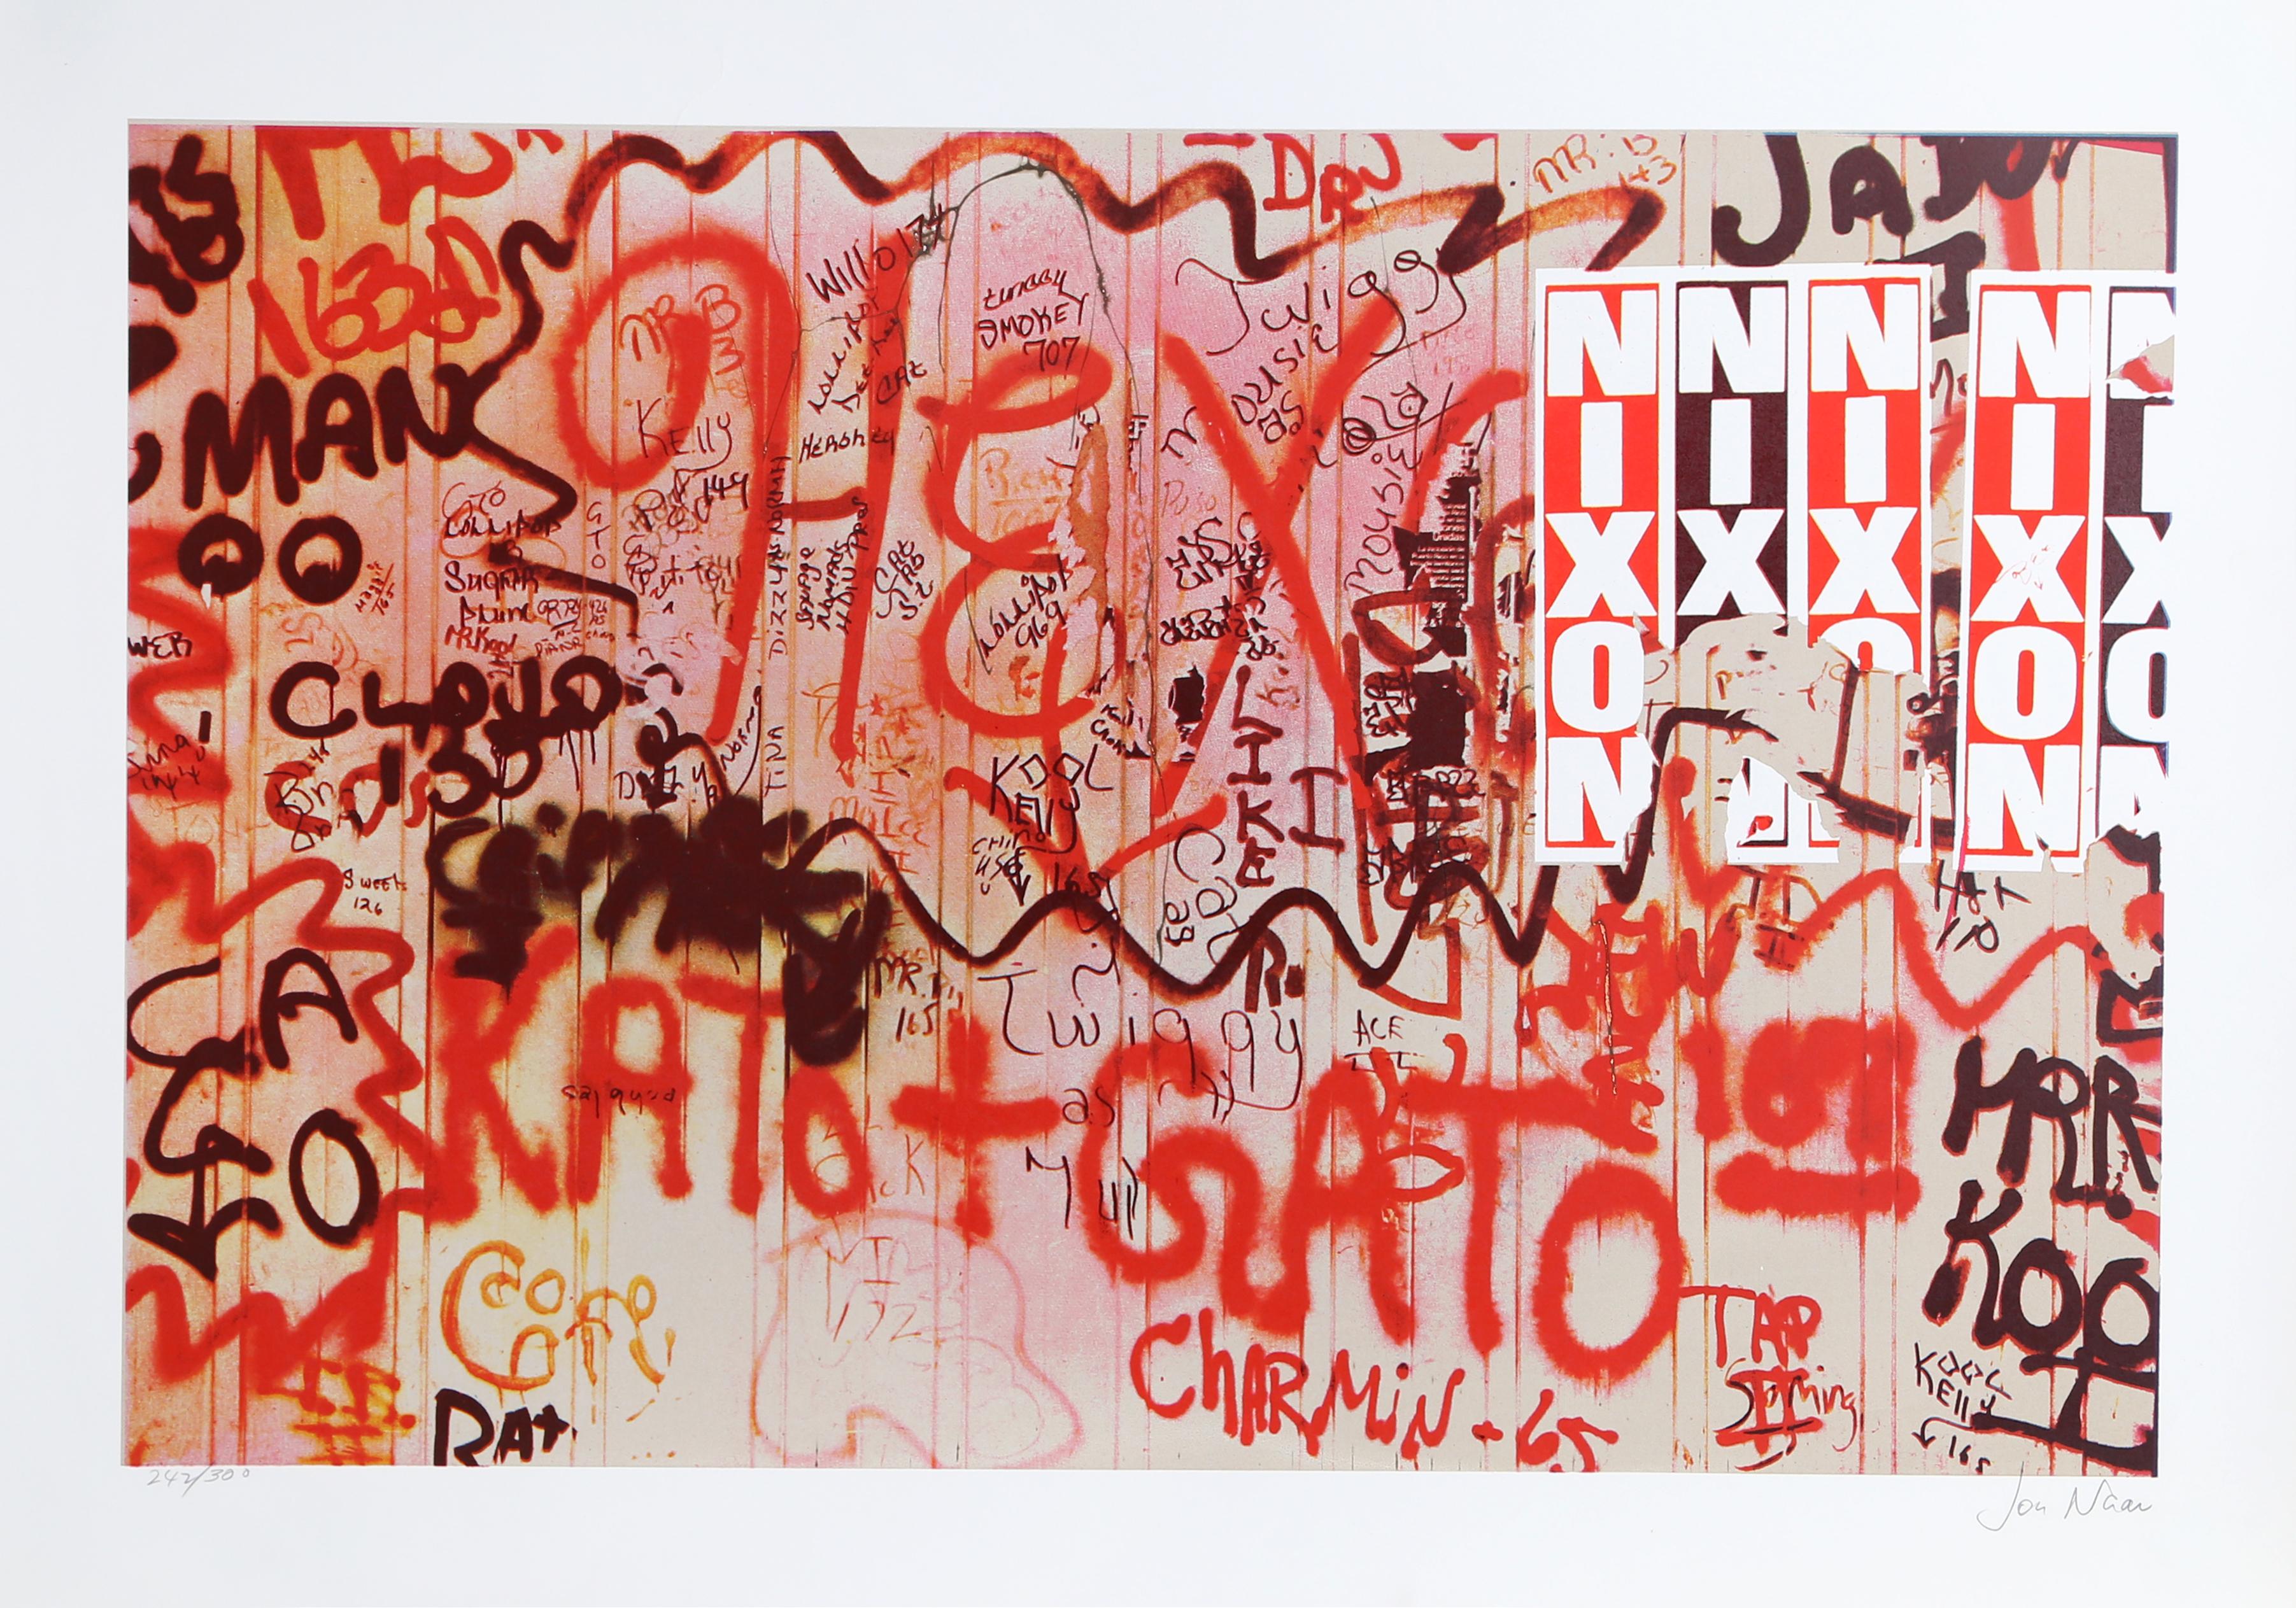 "Nixon" from Faith of Graffiti, 1974, Serigraph by Jon Naar